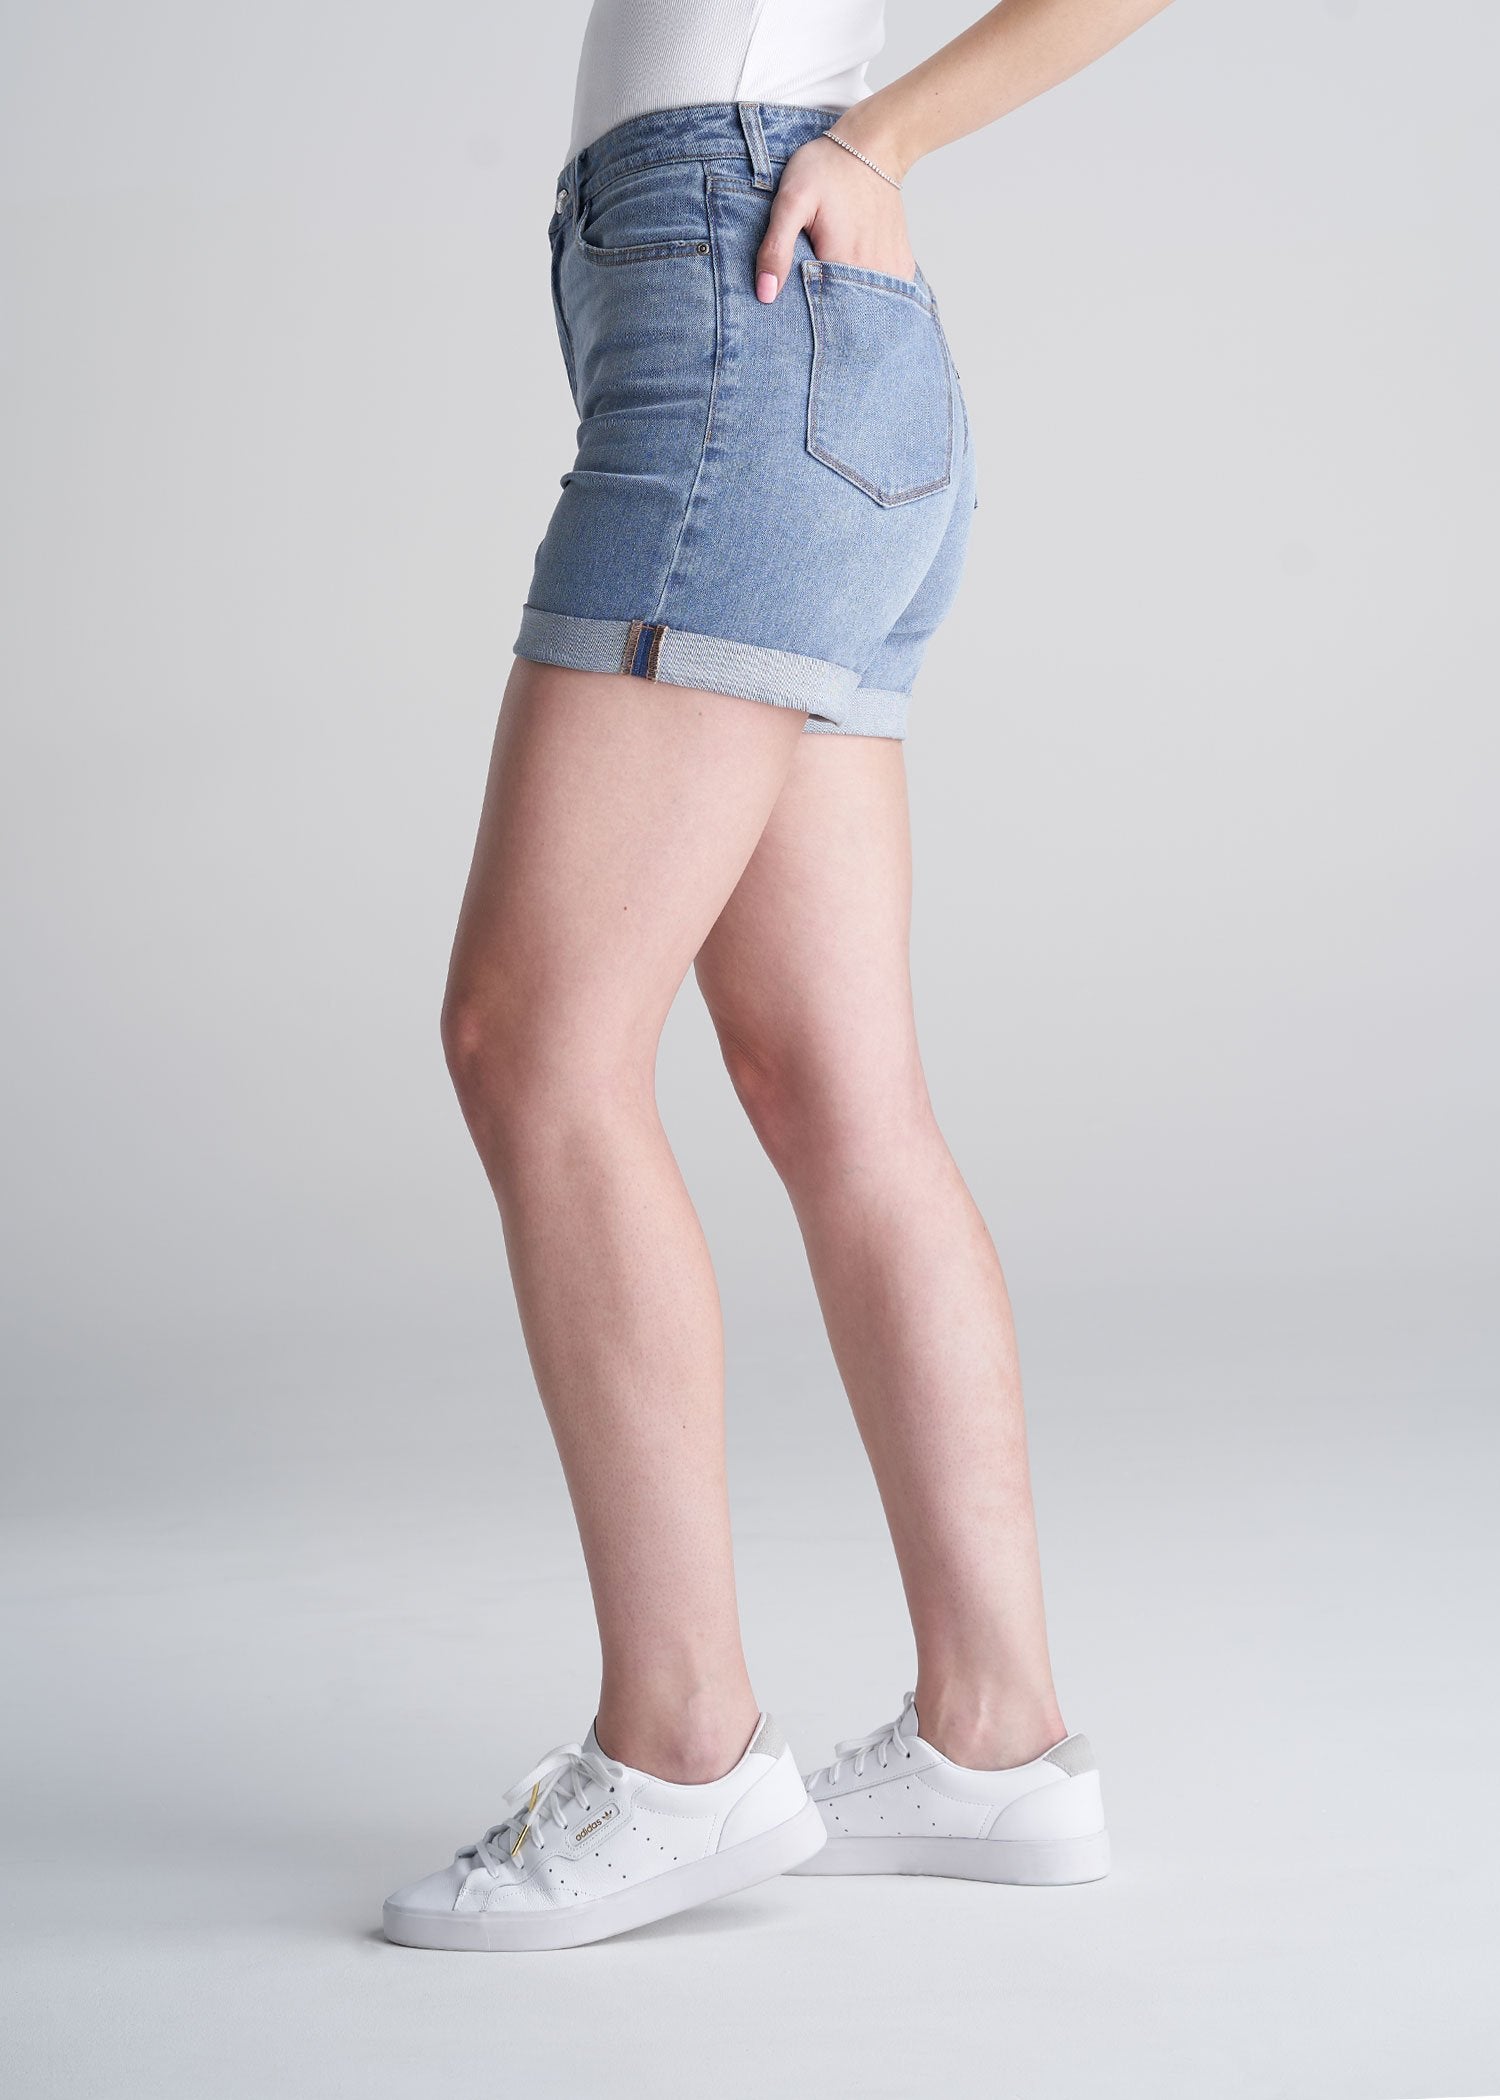 American_Tall_Womens_denim_shorts_Light_Blue-side